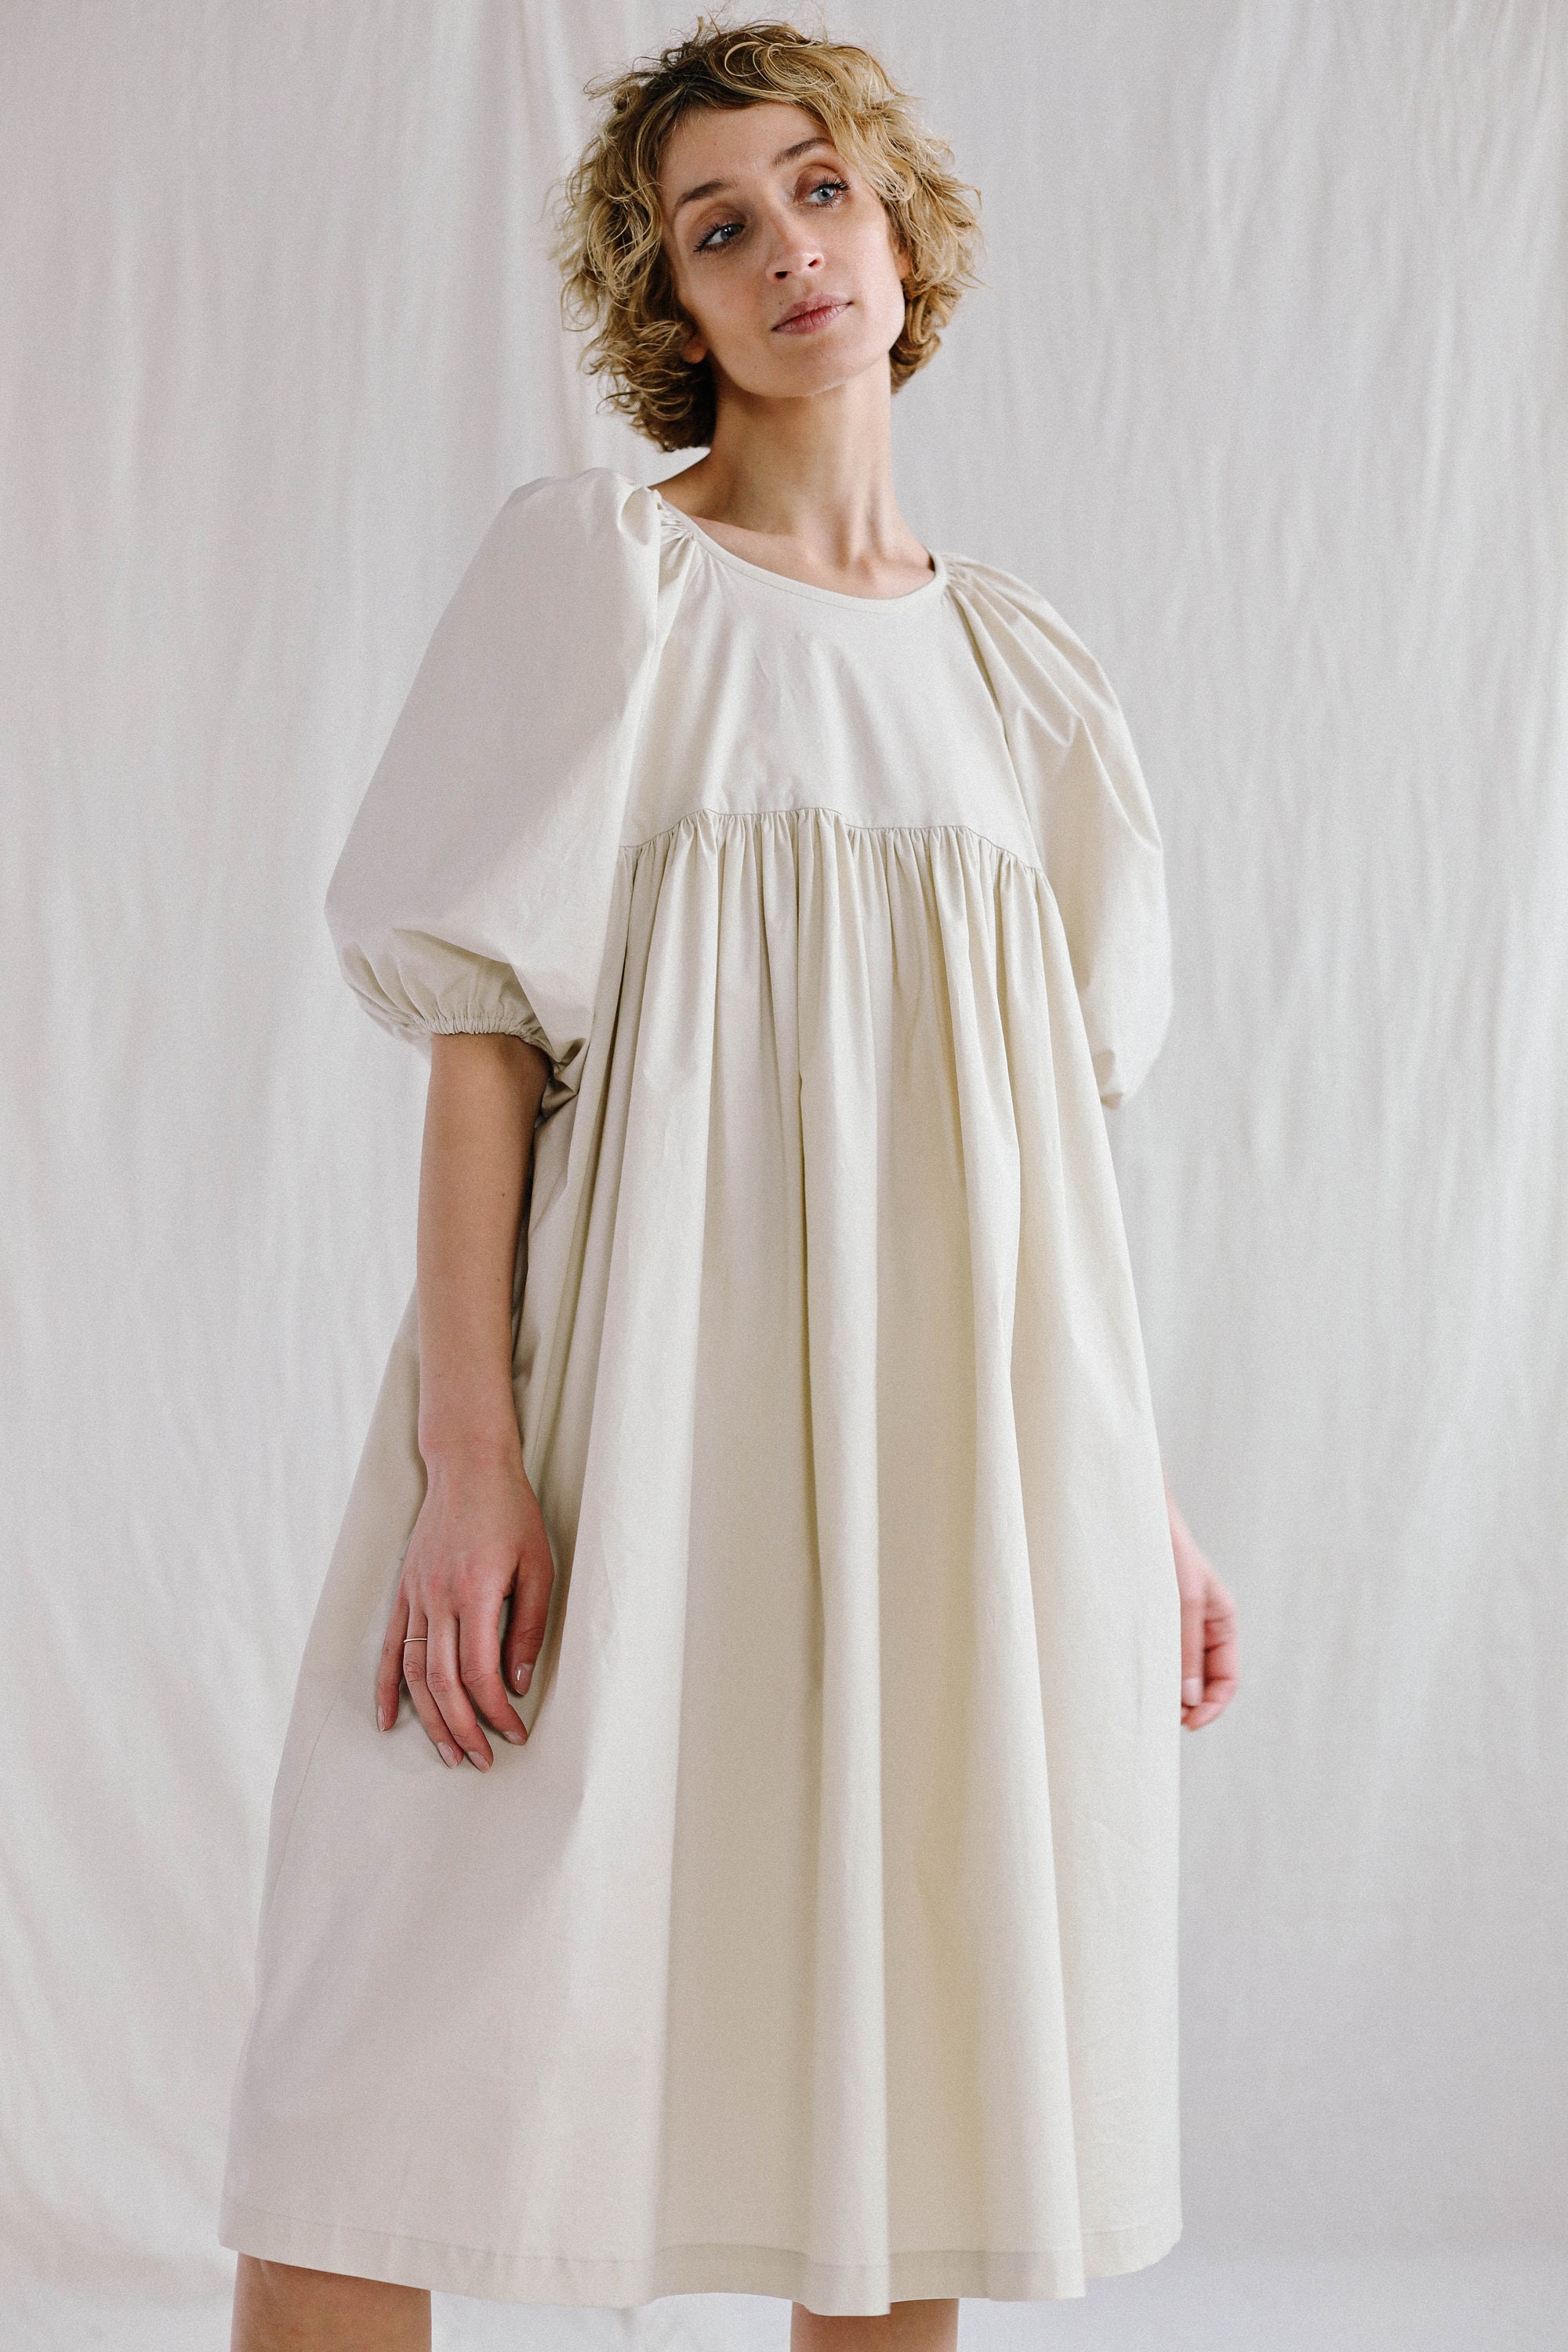 Empire waist raglan sleeve dress BELLE / OFFON CLOTHING | Etsy